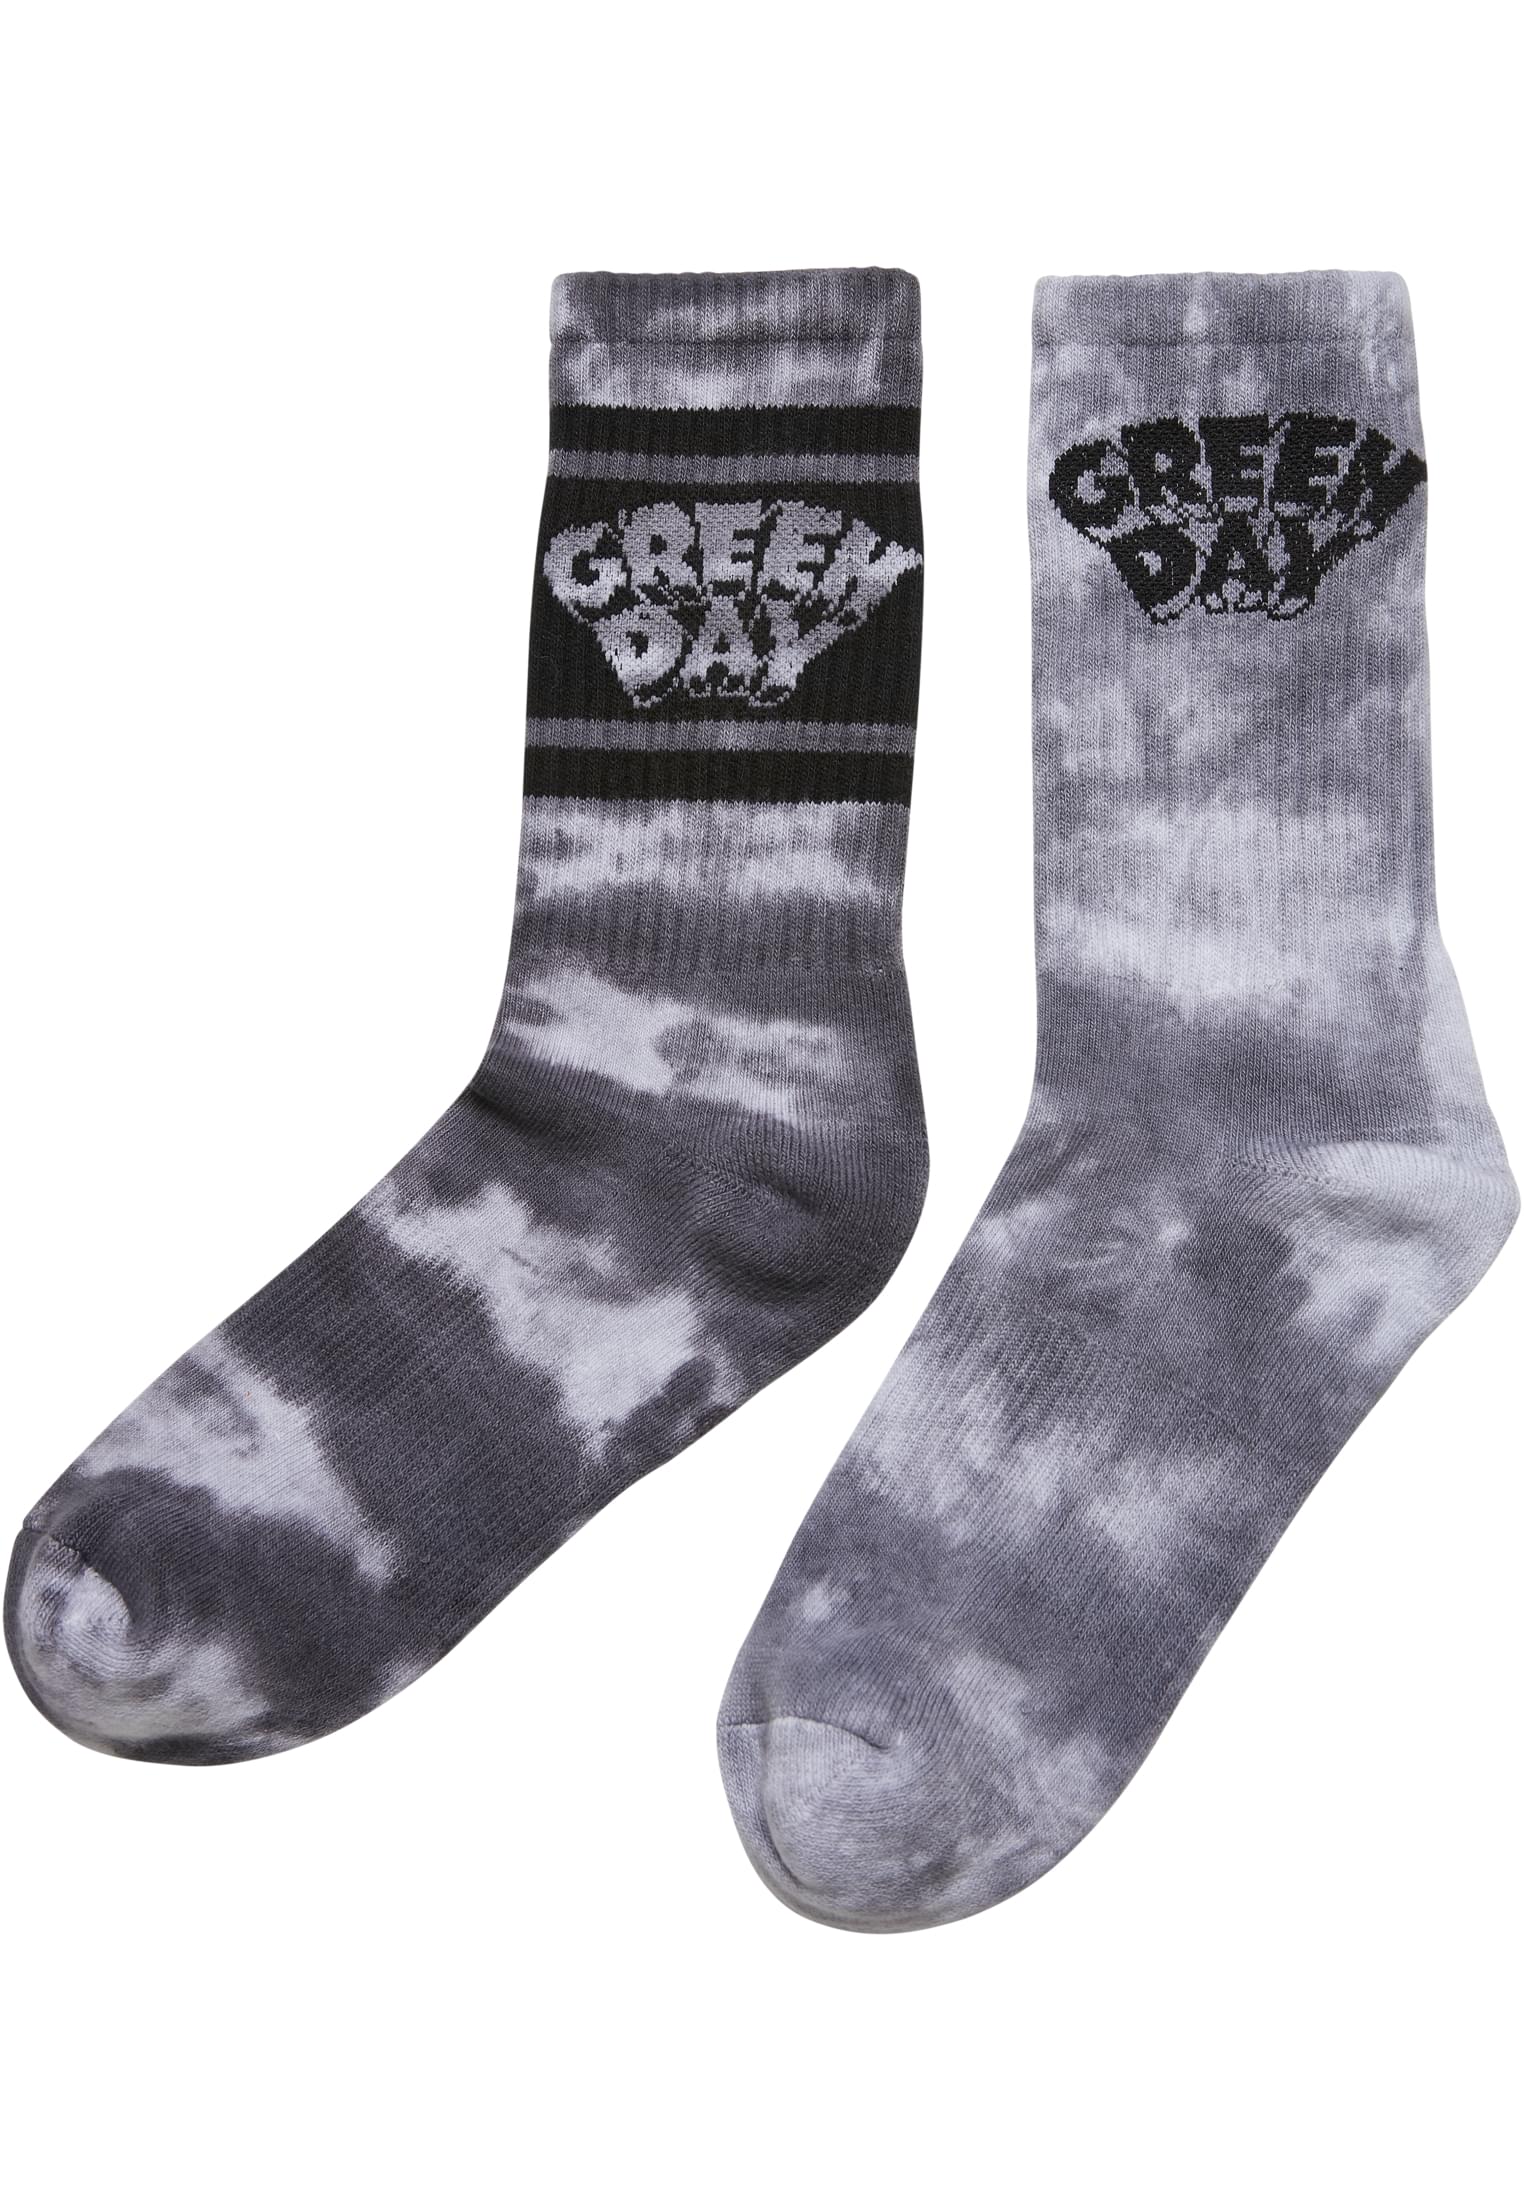 Accessoires Green Day Tie Die Socks 2-Pack in Farbe black/white